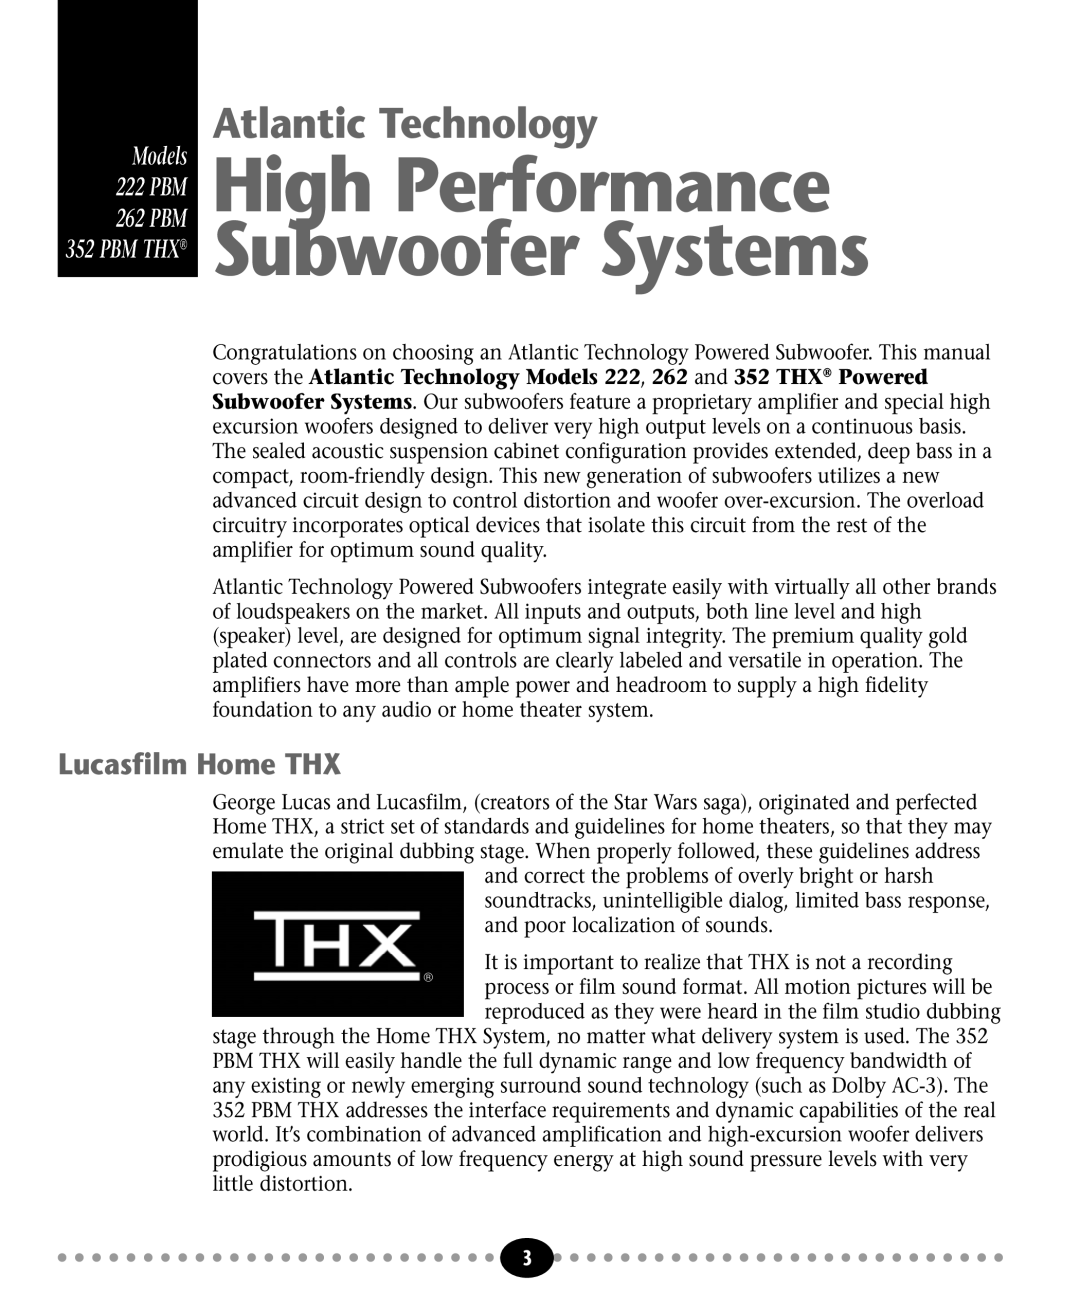 Atlantic Technology 352 PBM THX Lucasfilm Home THX, Subwoofer Systems, High Performance, Atlantic Technology, Models 